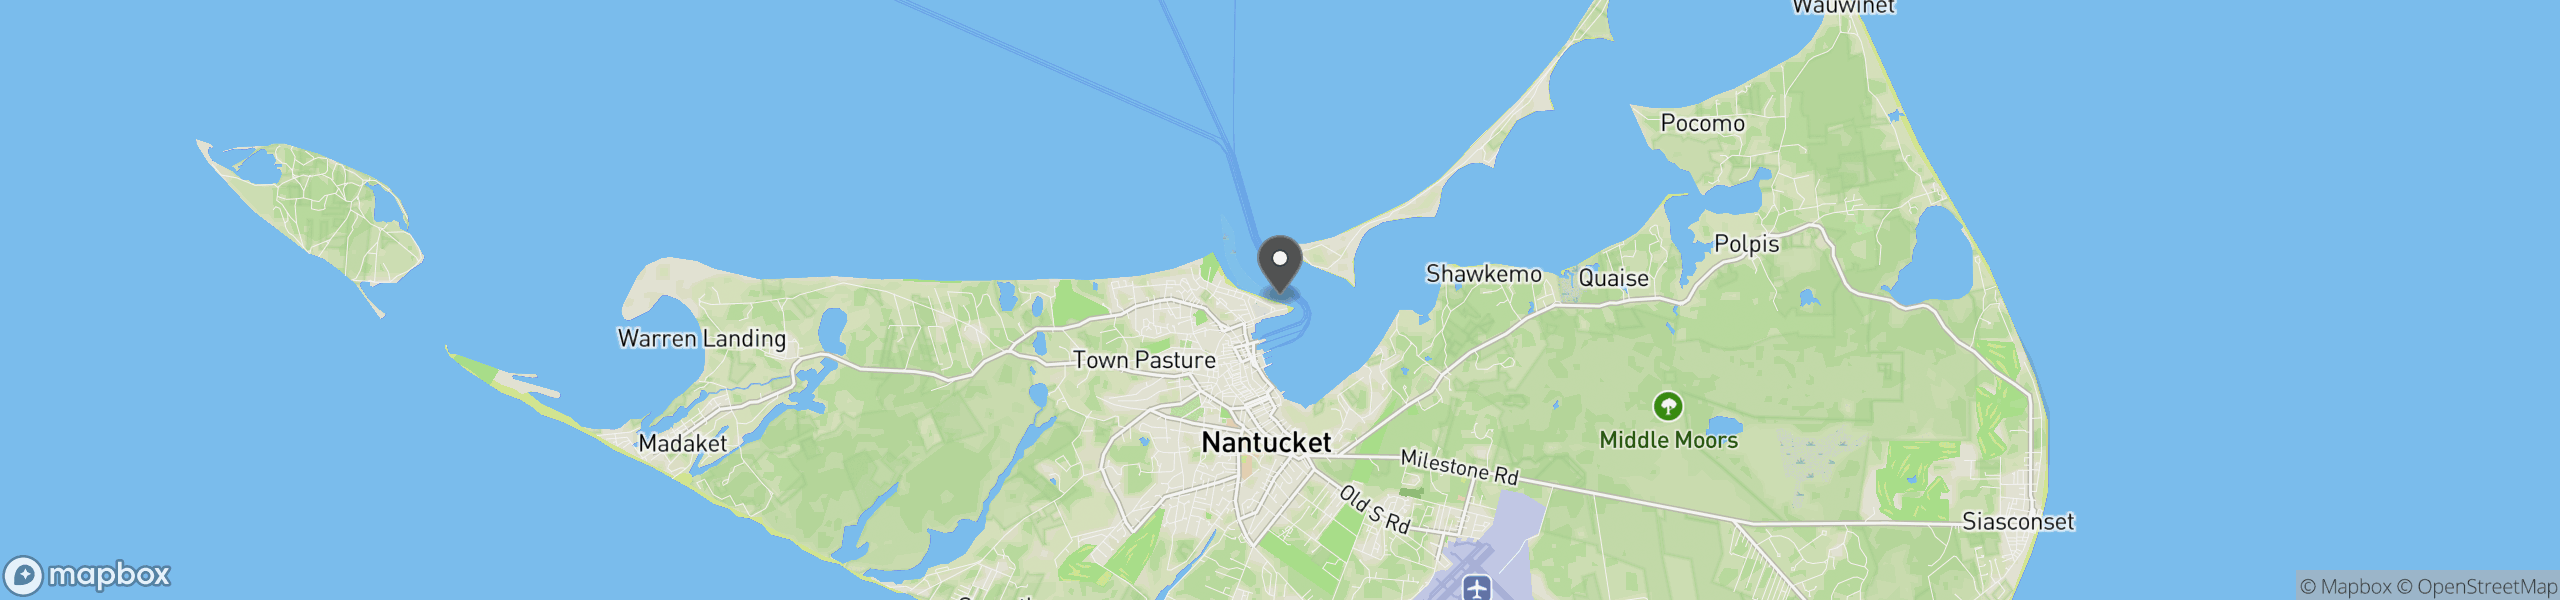 Nantucket, MA 02554